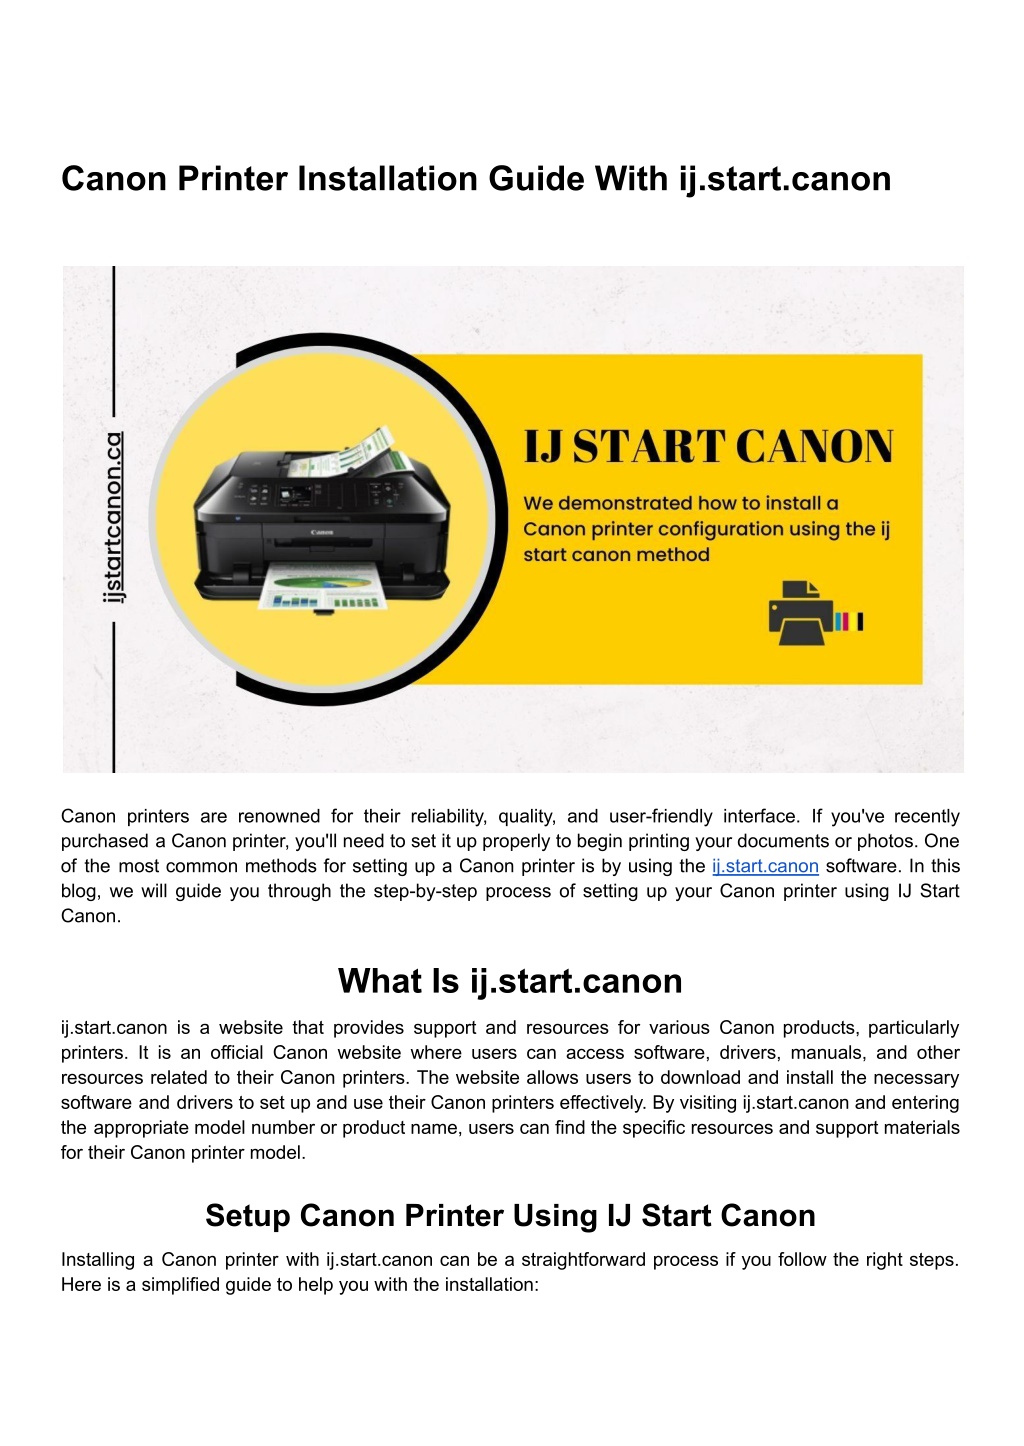 Ppt Canon Printer Installation Guide With Ijstartcanon Powerpoint Presentation Id12623797 0567